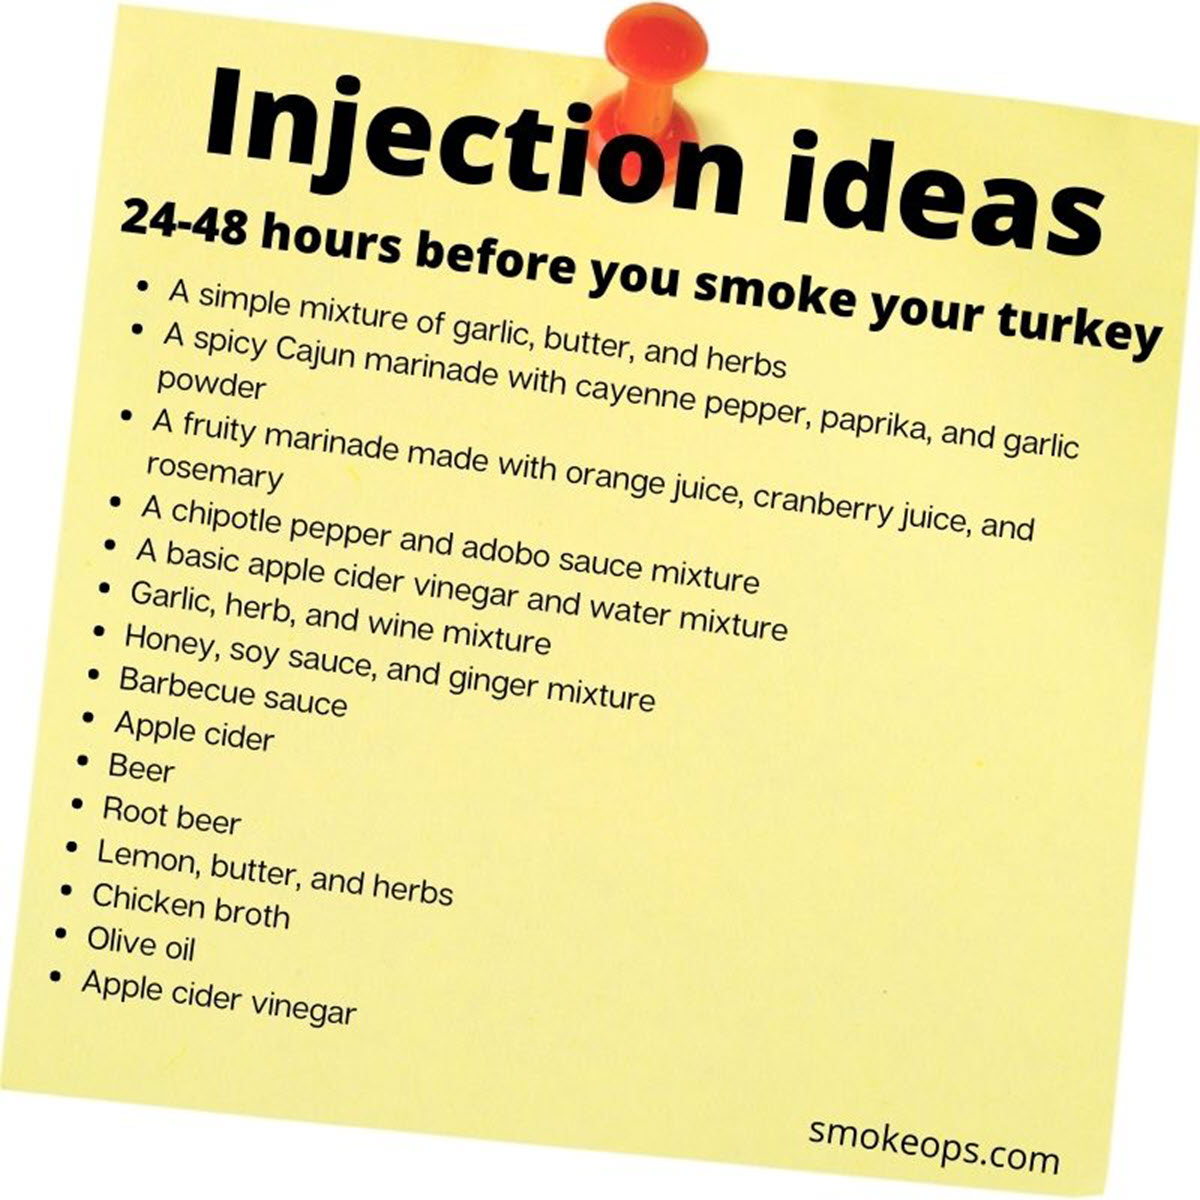 Smoked turkey - injection recipe